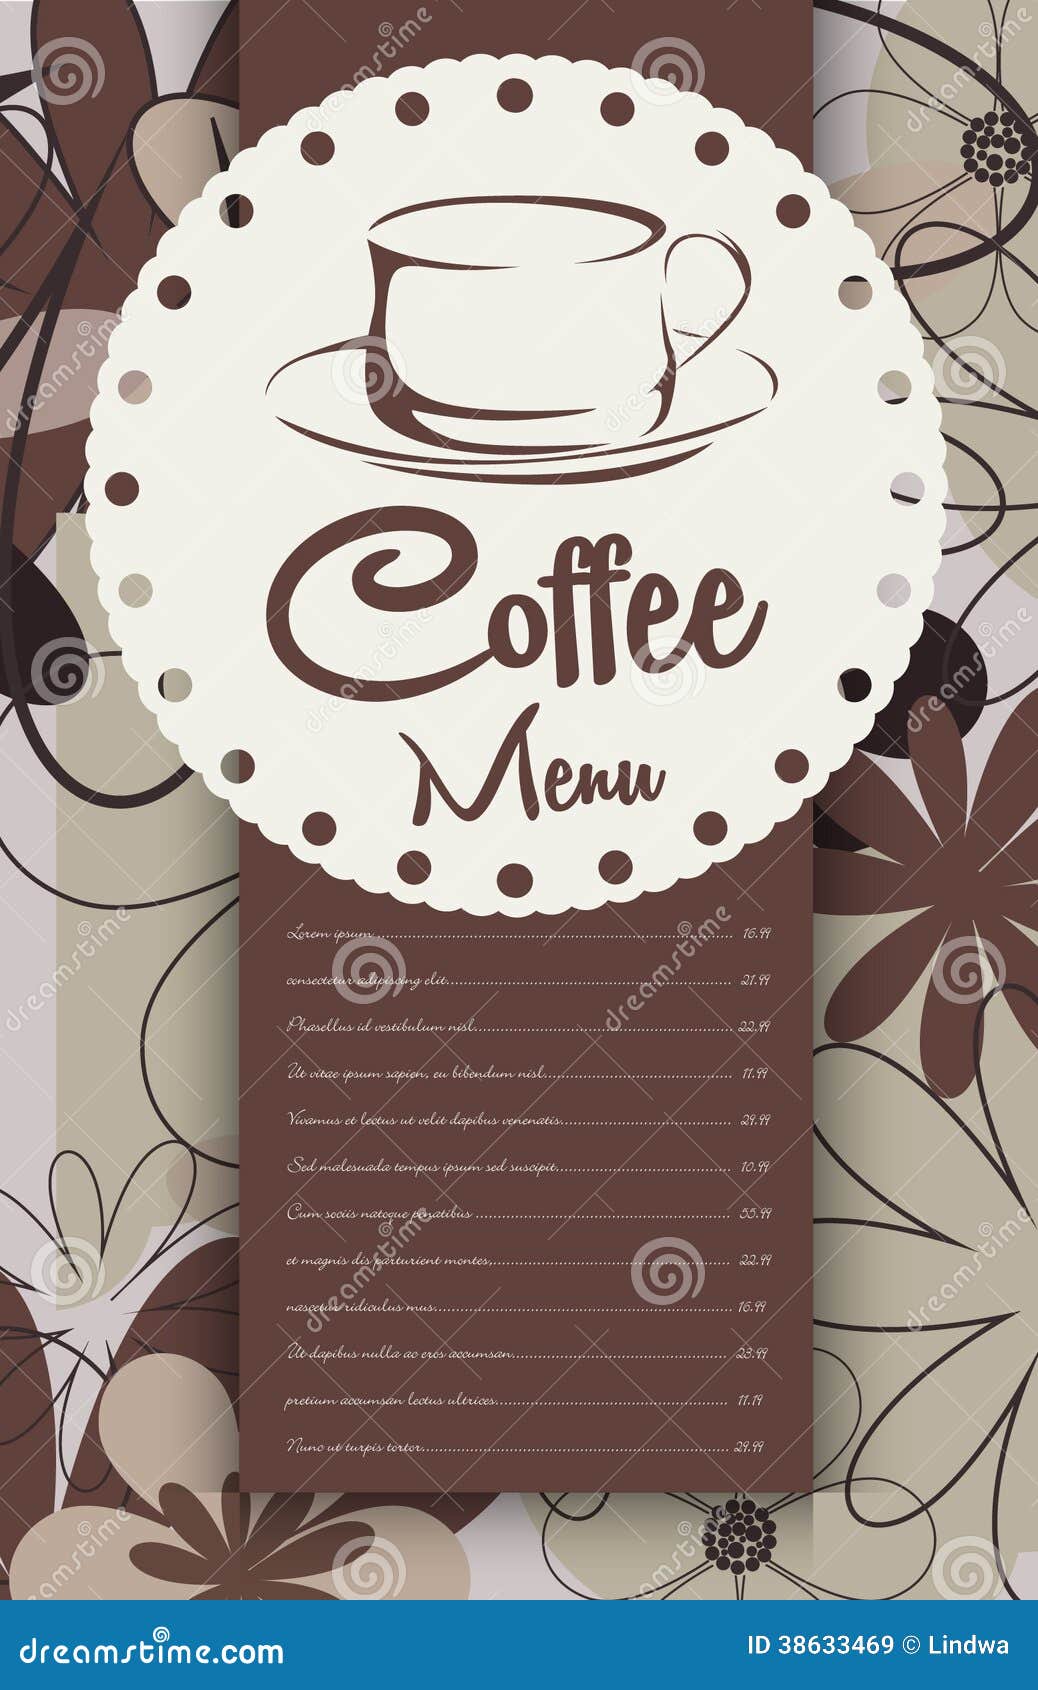 menu for coffeehouse